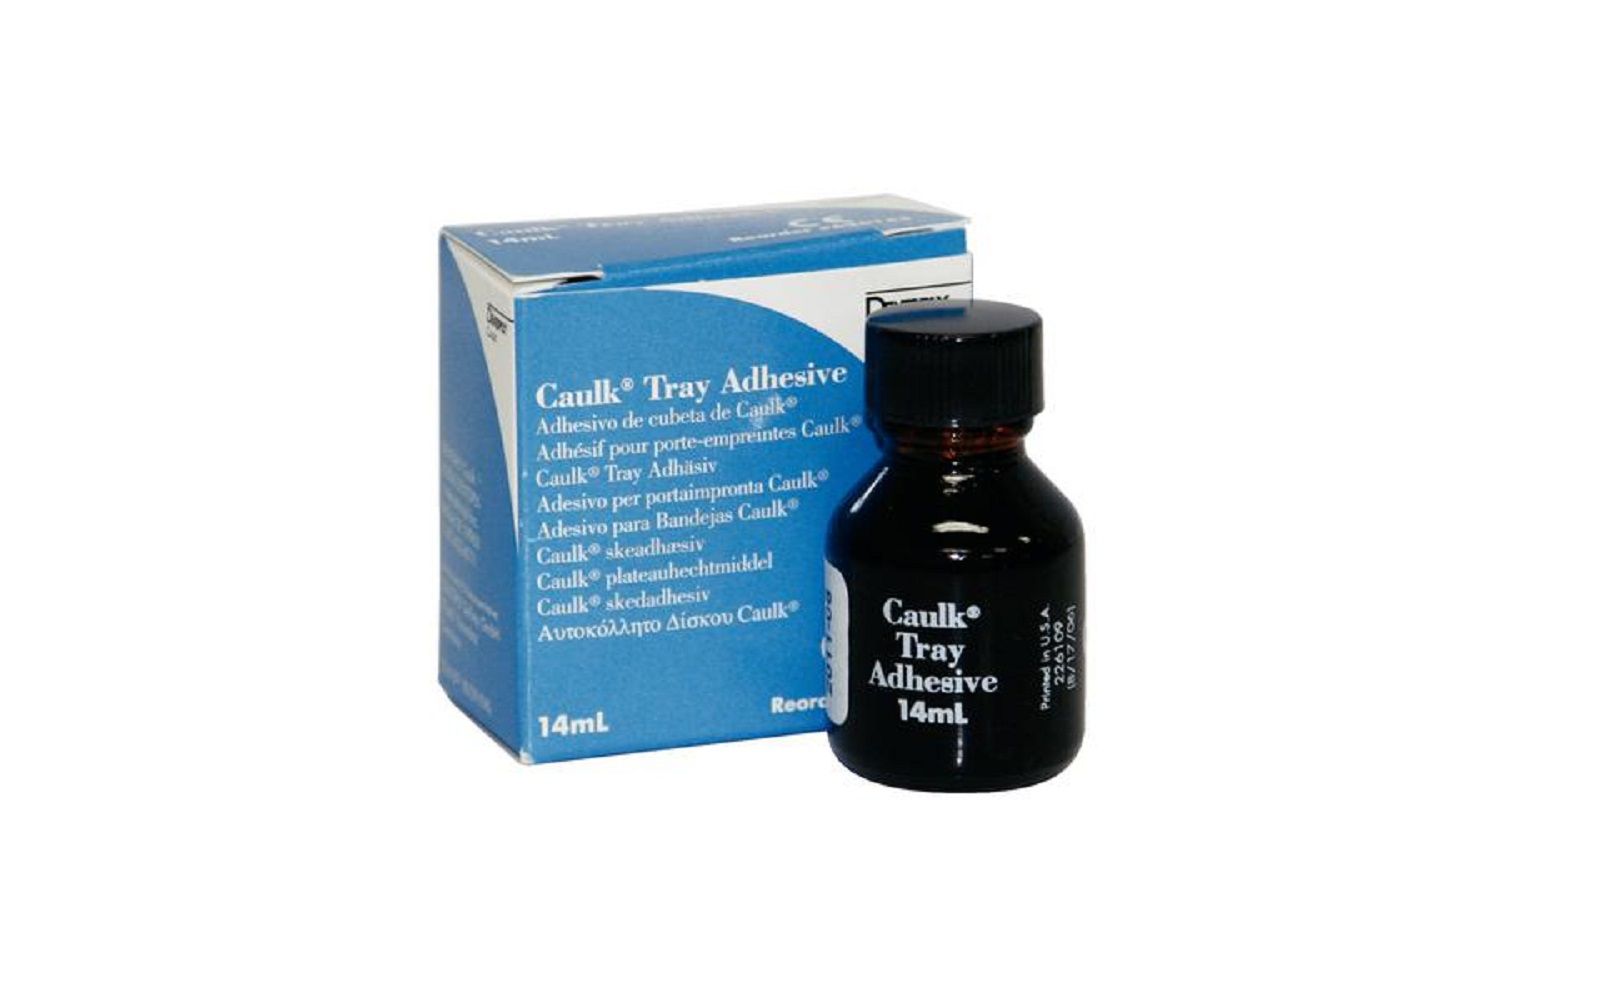 Caulk® vps tray adhesive, 14 ml bottle